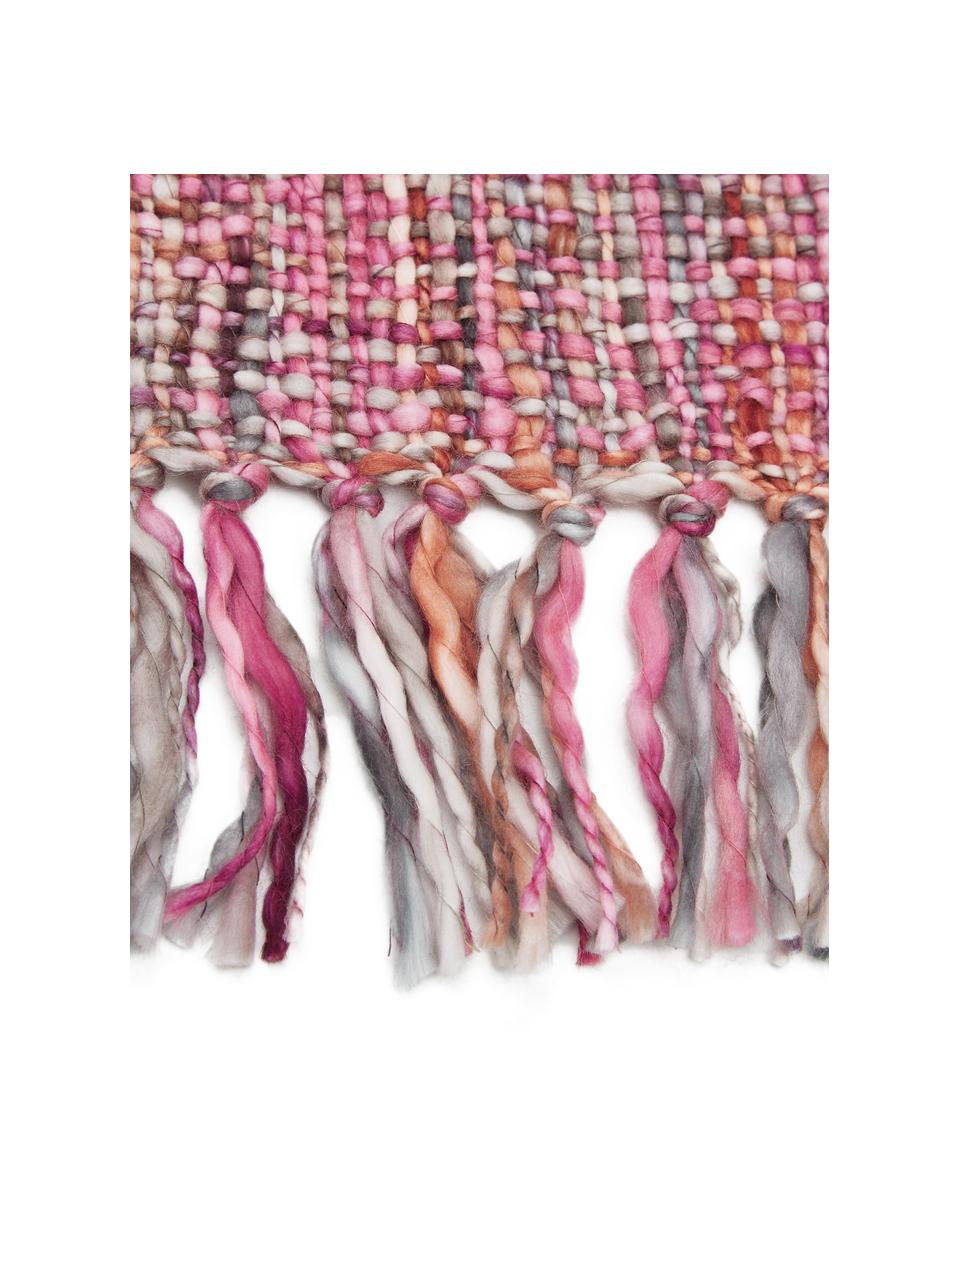 Plaid Tye met gekleurd structuuroppervlak, Acryl, Multicolour, 130 x 170 cm